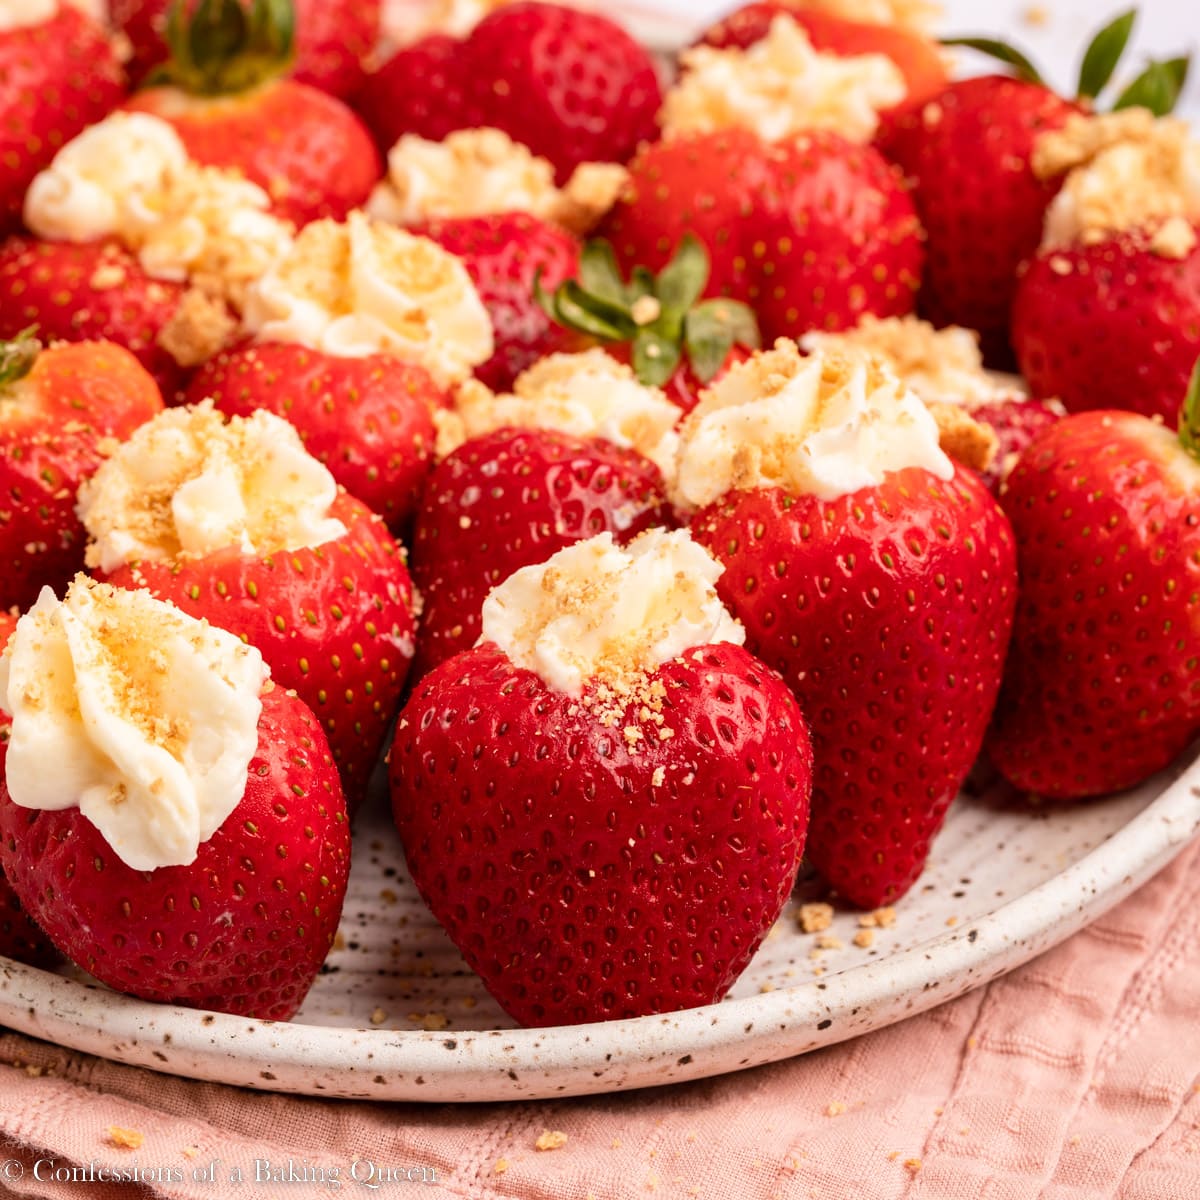 Cheesecake stuffed strawberries arranged on a plate.